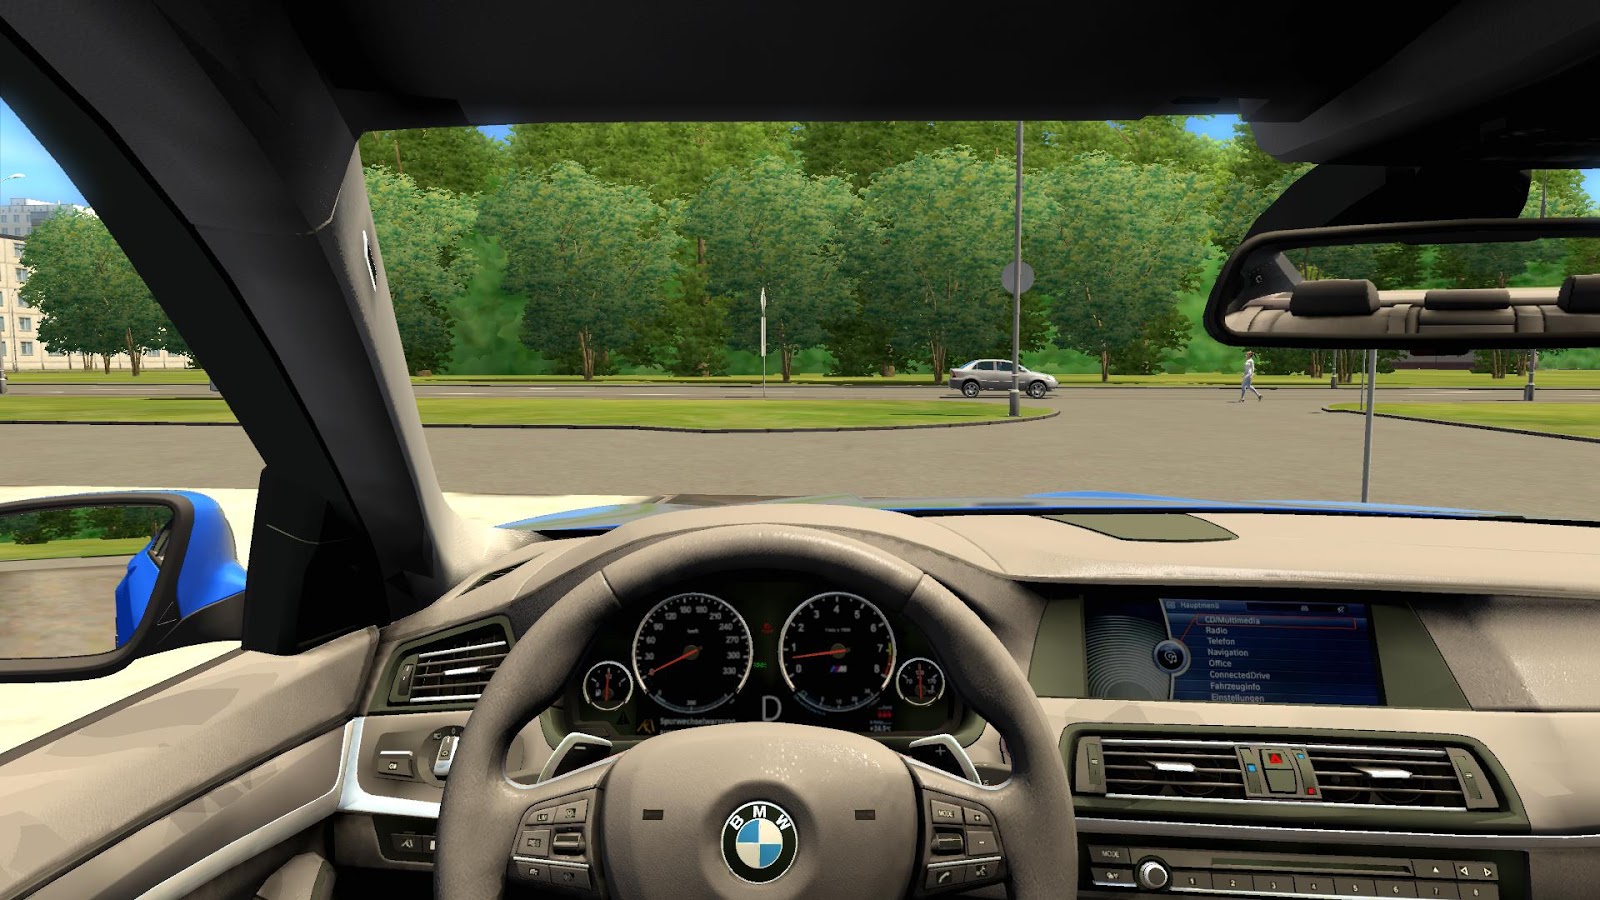 Графика city car driving. BMW m5 f10 City car Driving. City car Driving 1.5.5.3. BMW 328i City car Driving. BMW 320 D City car Driving.